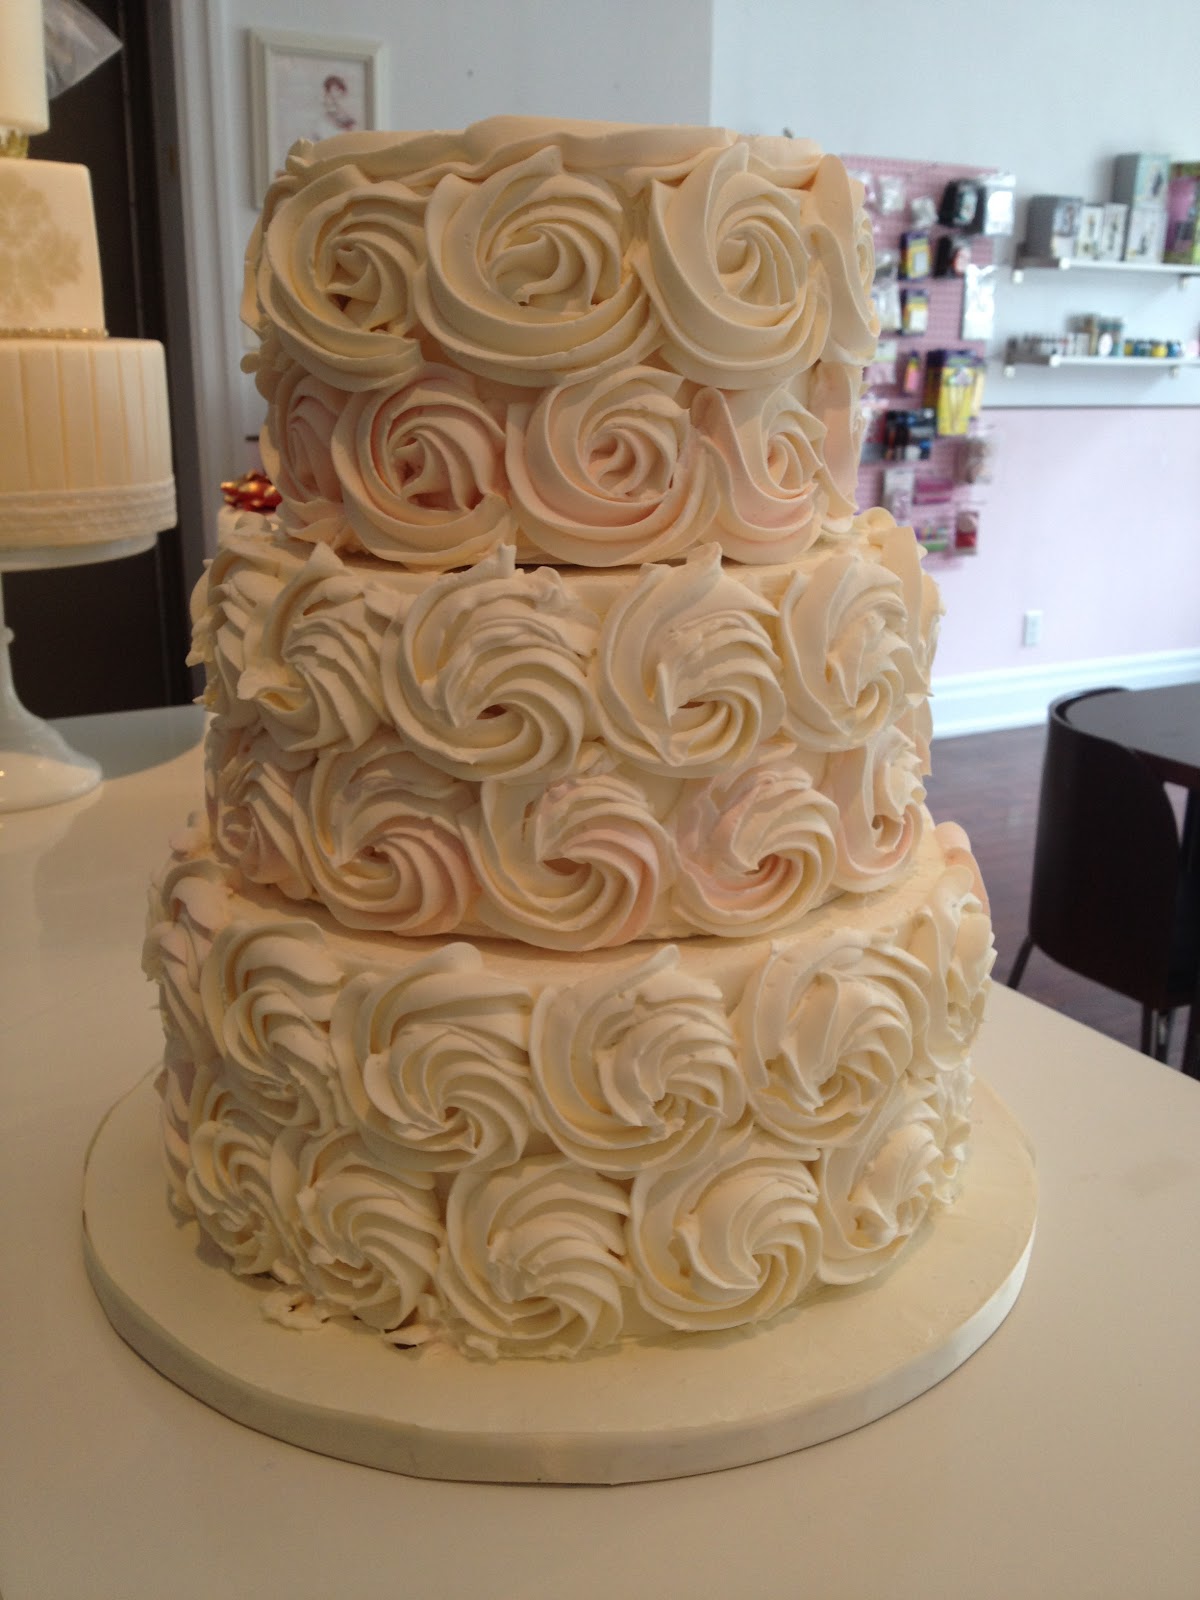 The Wedding Cake Shoppe: Buttercream Cakes Have made a Comeback!!